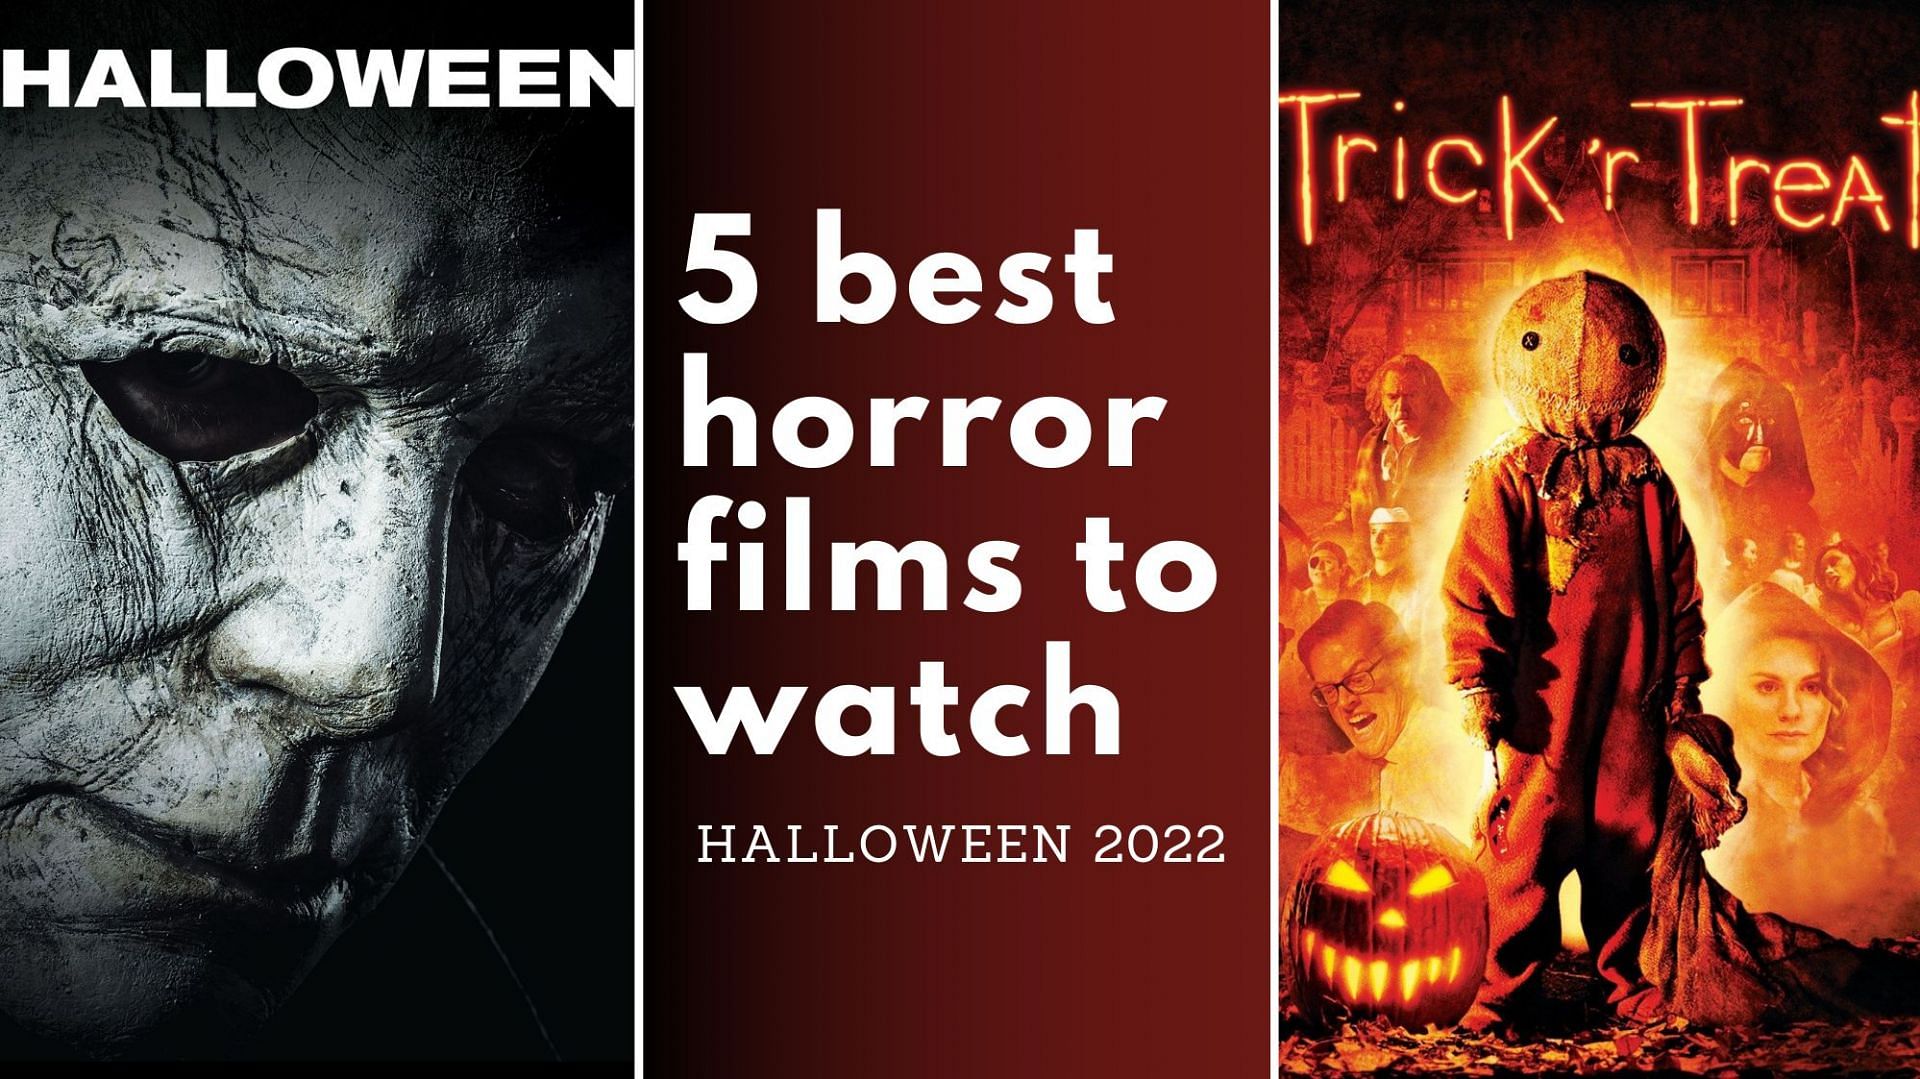 Halloween 2022 5 best horror films to watch